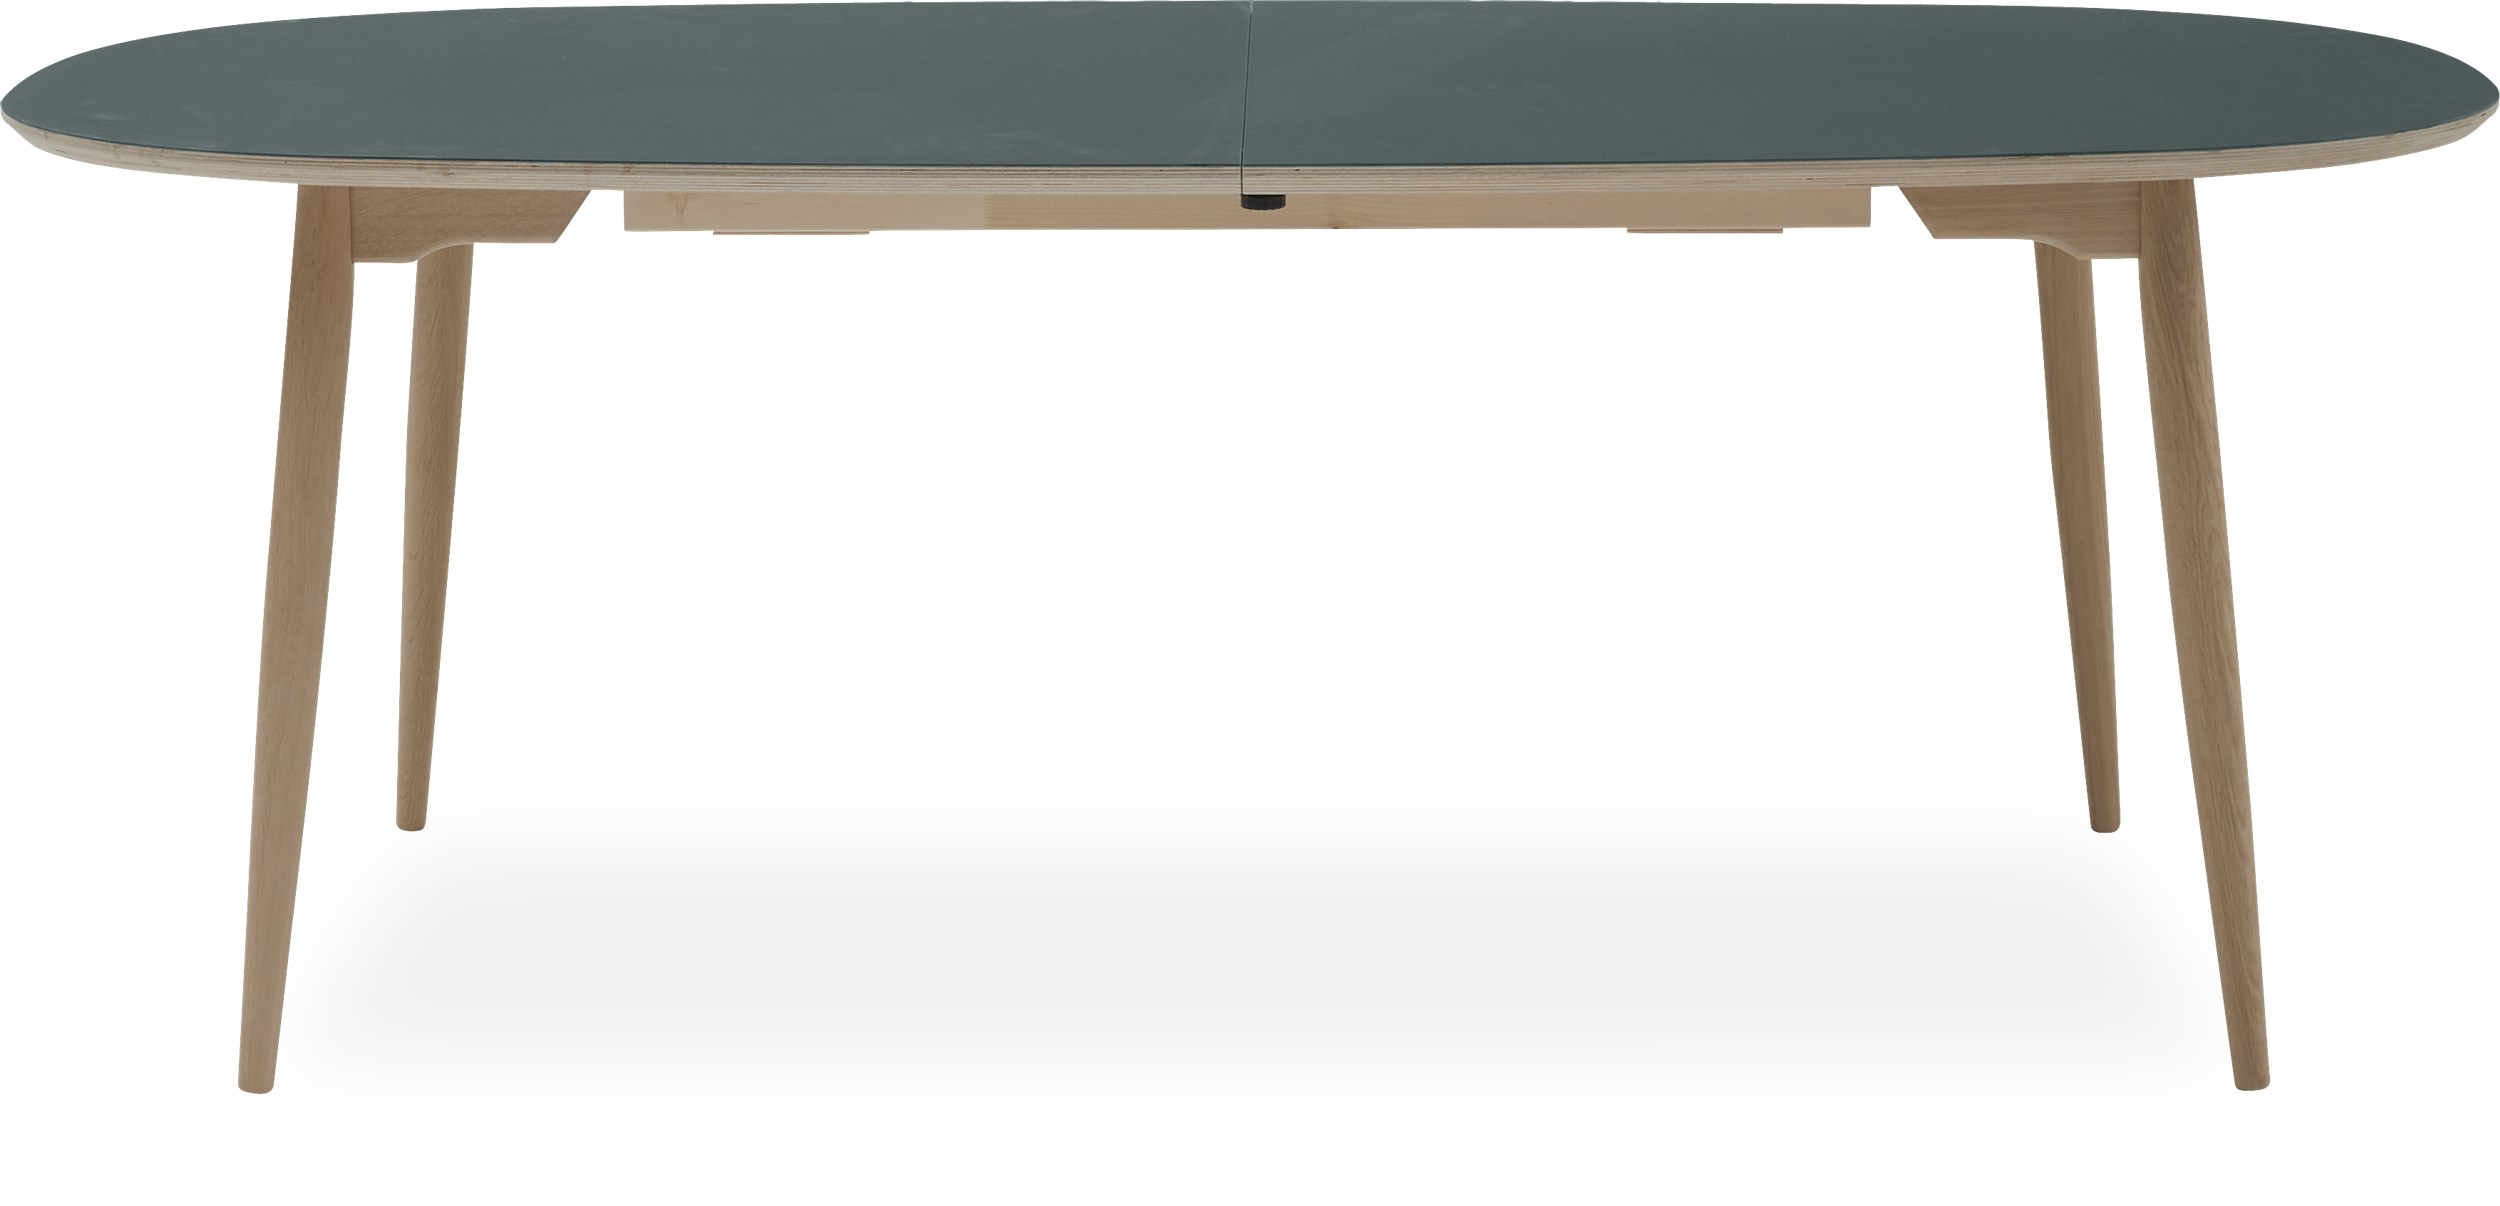 Haslev 5-H Matbord 200 x 105 x 74 cm - Ovansida i grönt linoleum, kant i björkkryssfaner och ben i obehandlad ek